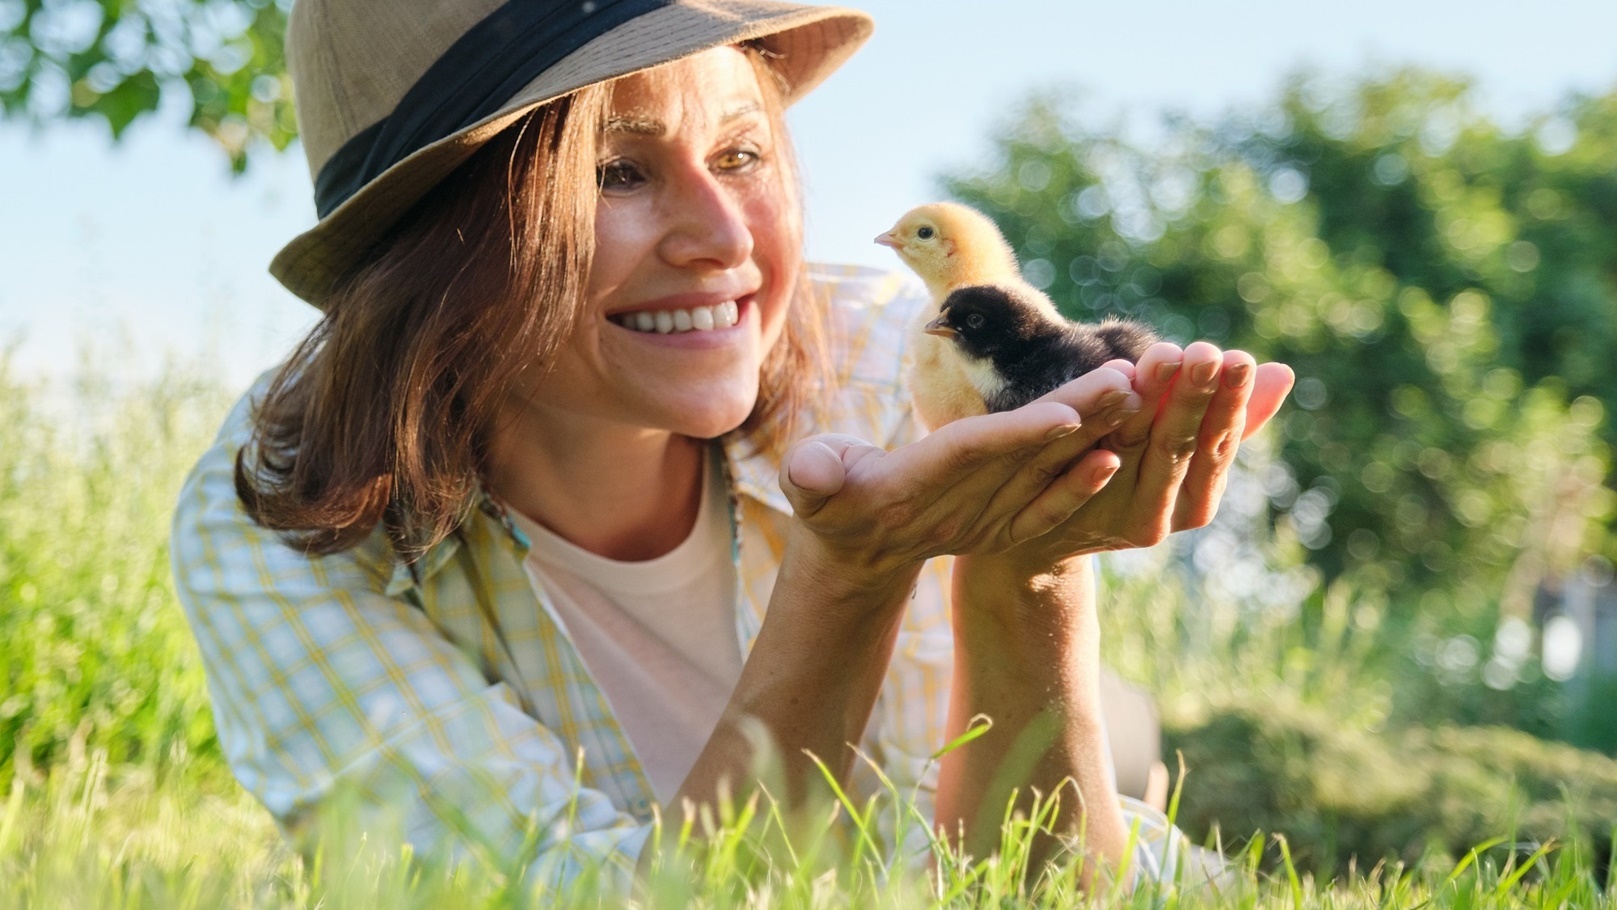 newborn-baby-chickens-in-hand-of-farmer-woman-2022-01-14-00-11-21-utc